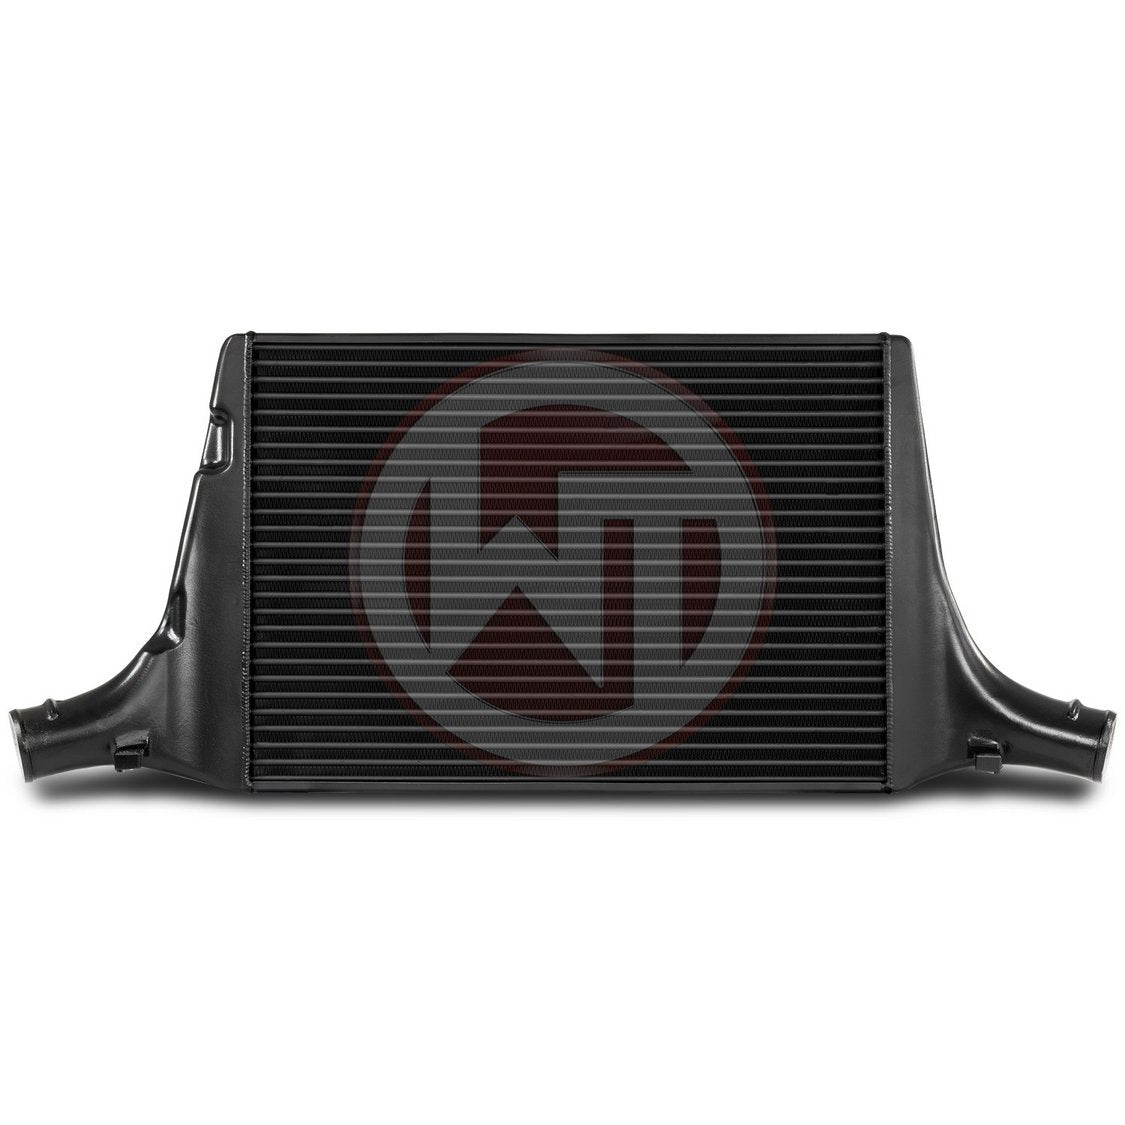 WAGNER TUNING -
Comp. Ladeluftkühler Kit Audi A4/5 B8.5 2,0 TFSI / TDI